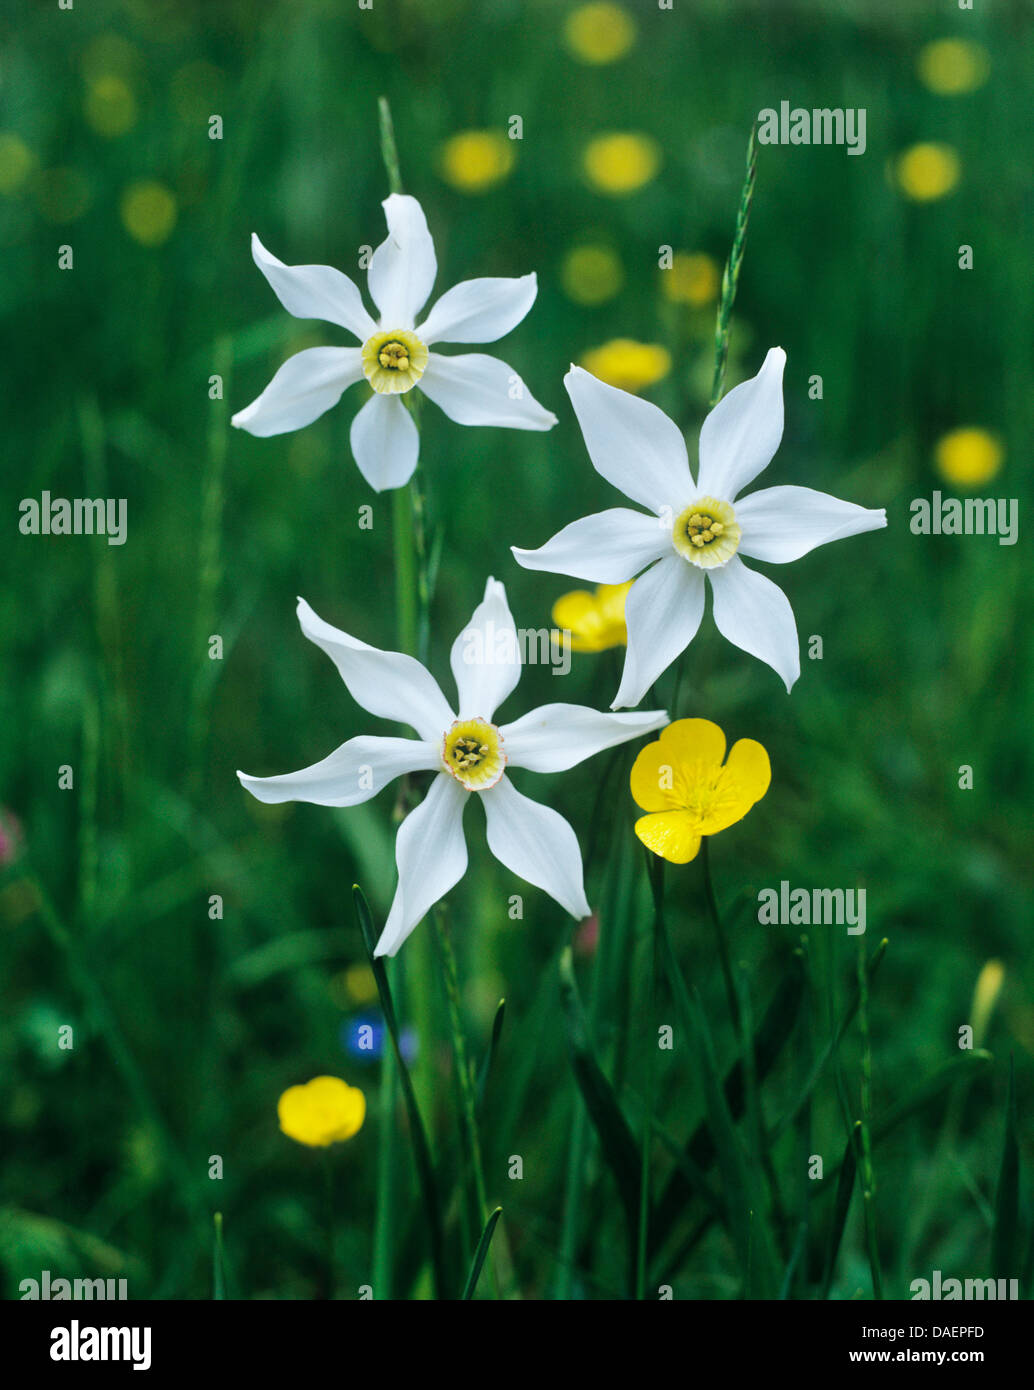 pheasant's-eye daffodil, pheasant's-eye narcissus, poet's narcissus (Narcissus radiiflorus, Narcissus poeticus ssp. radiiflorus), blooming in a meadow with buttercups Stock Photo